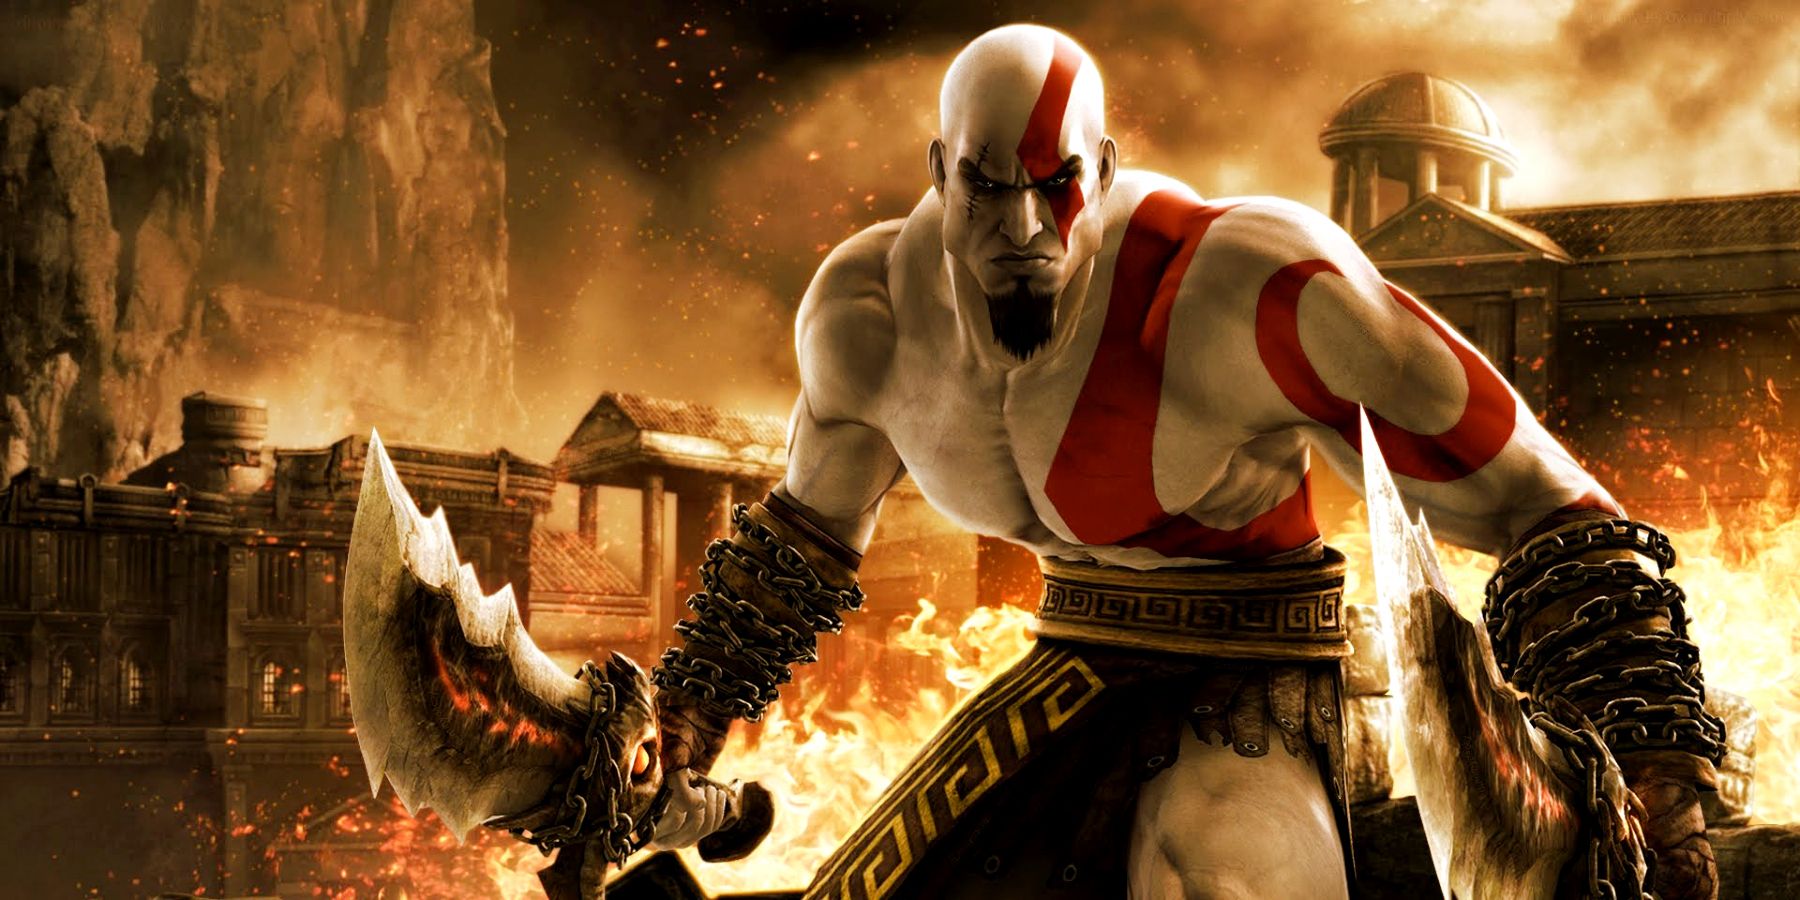 God of War: Ghost of Sparta - Deimos in God of War III